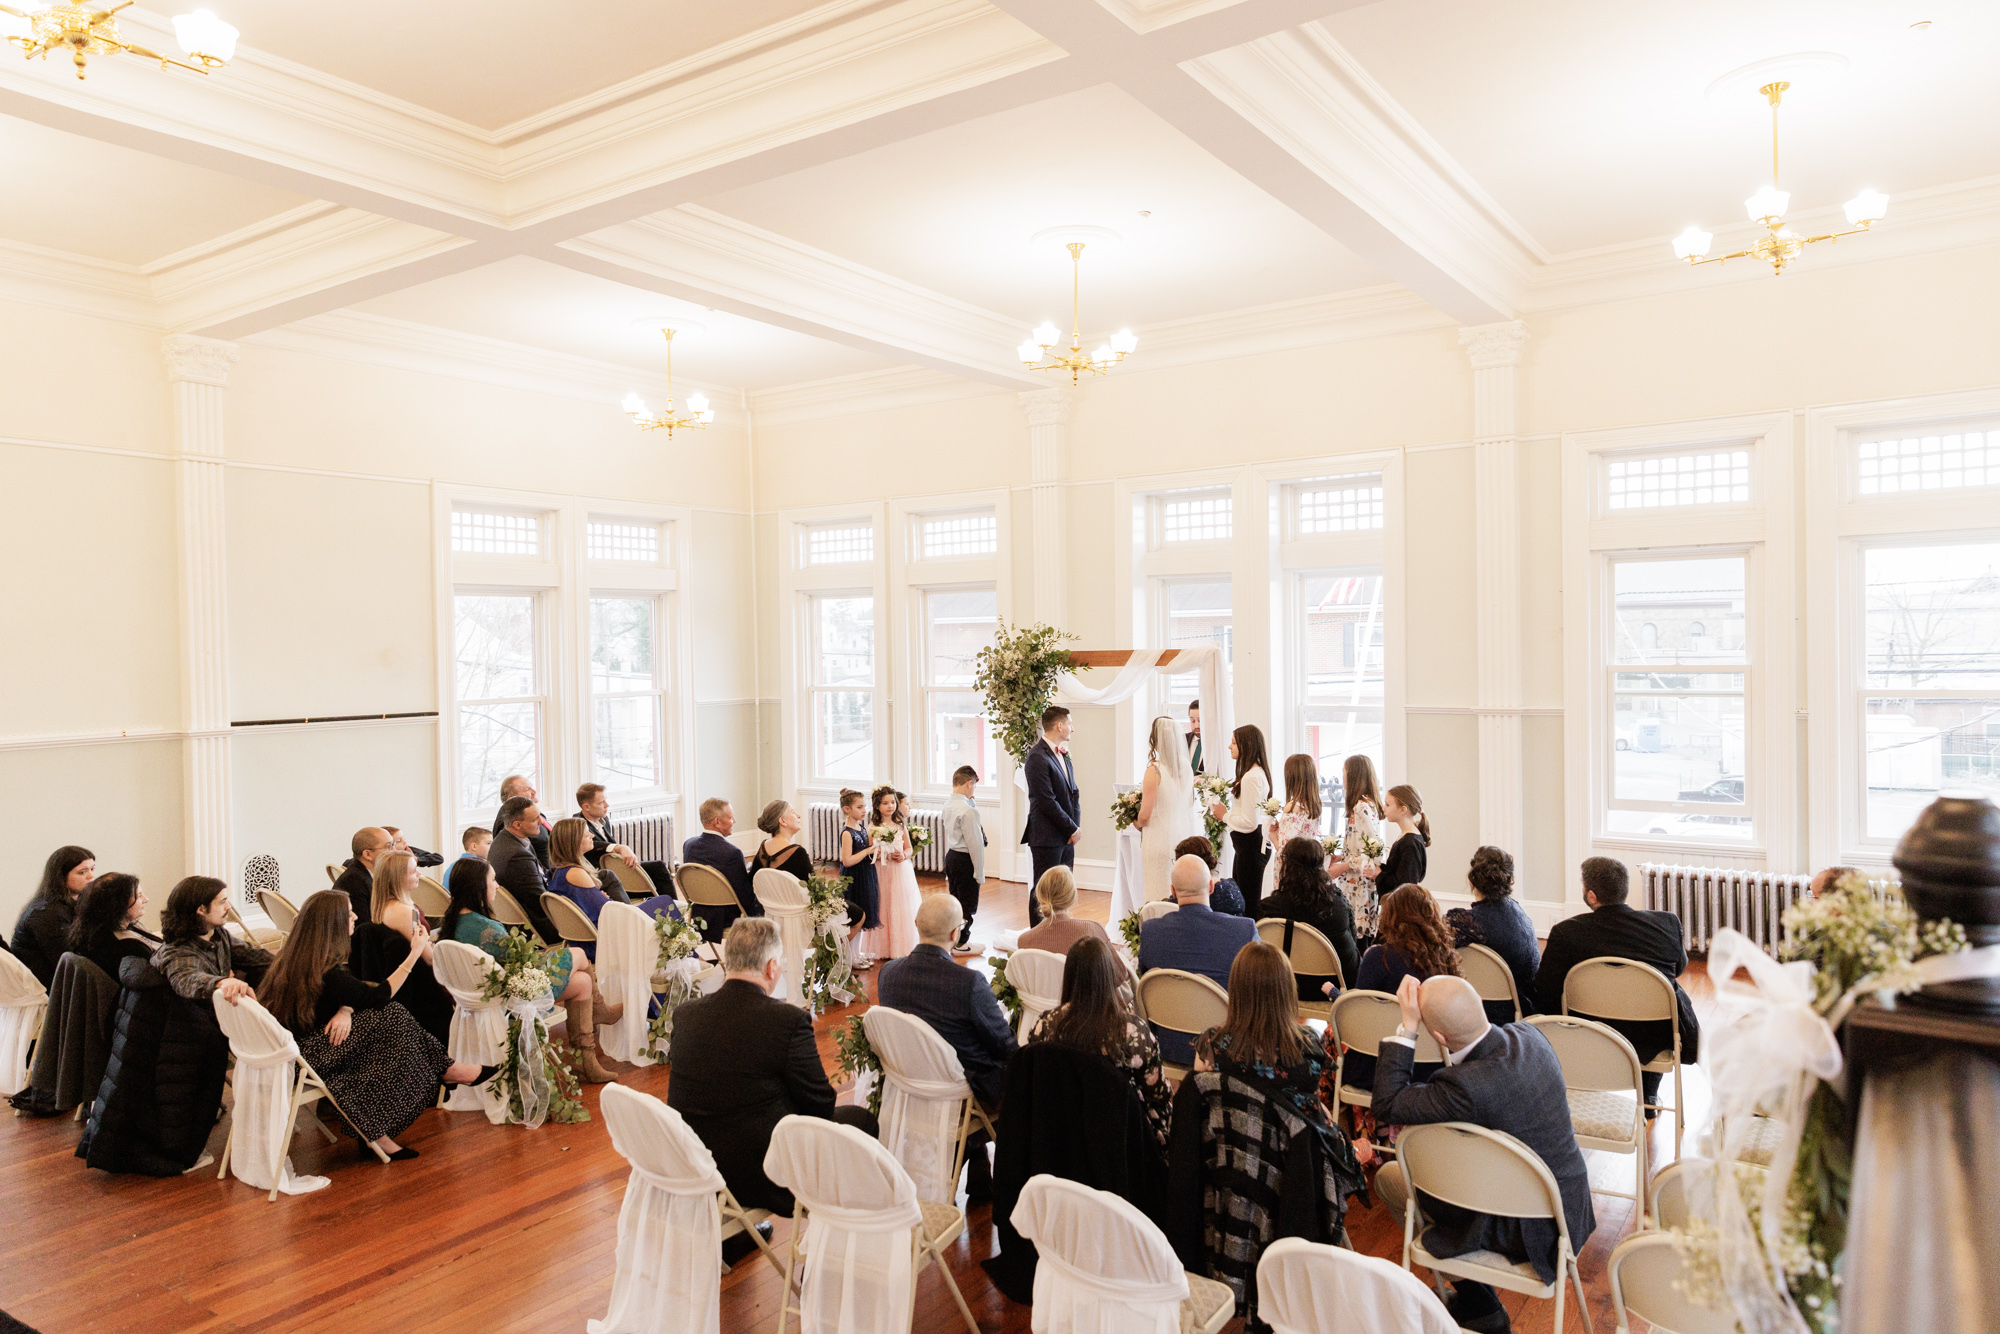 Elegant wedding ceremony at historic Old City Hall in Bordentown, NJ